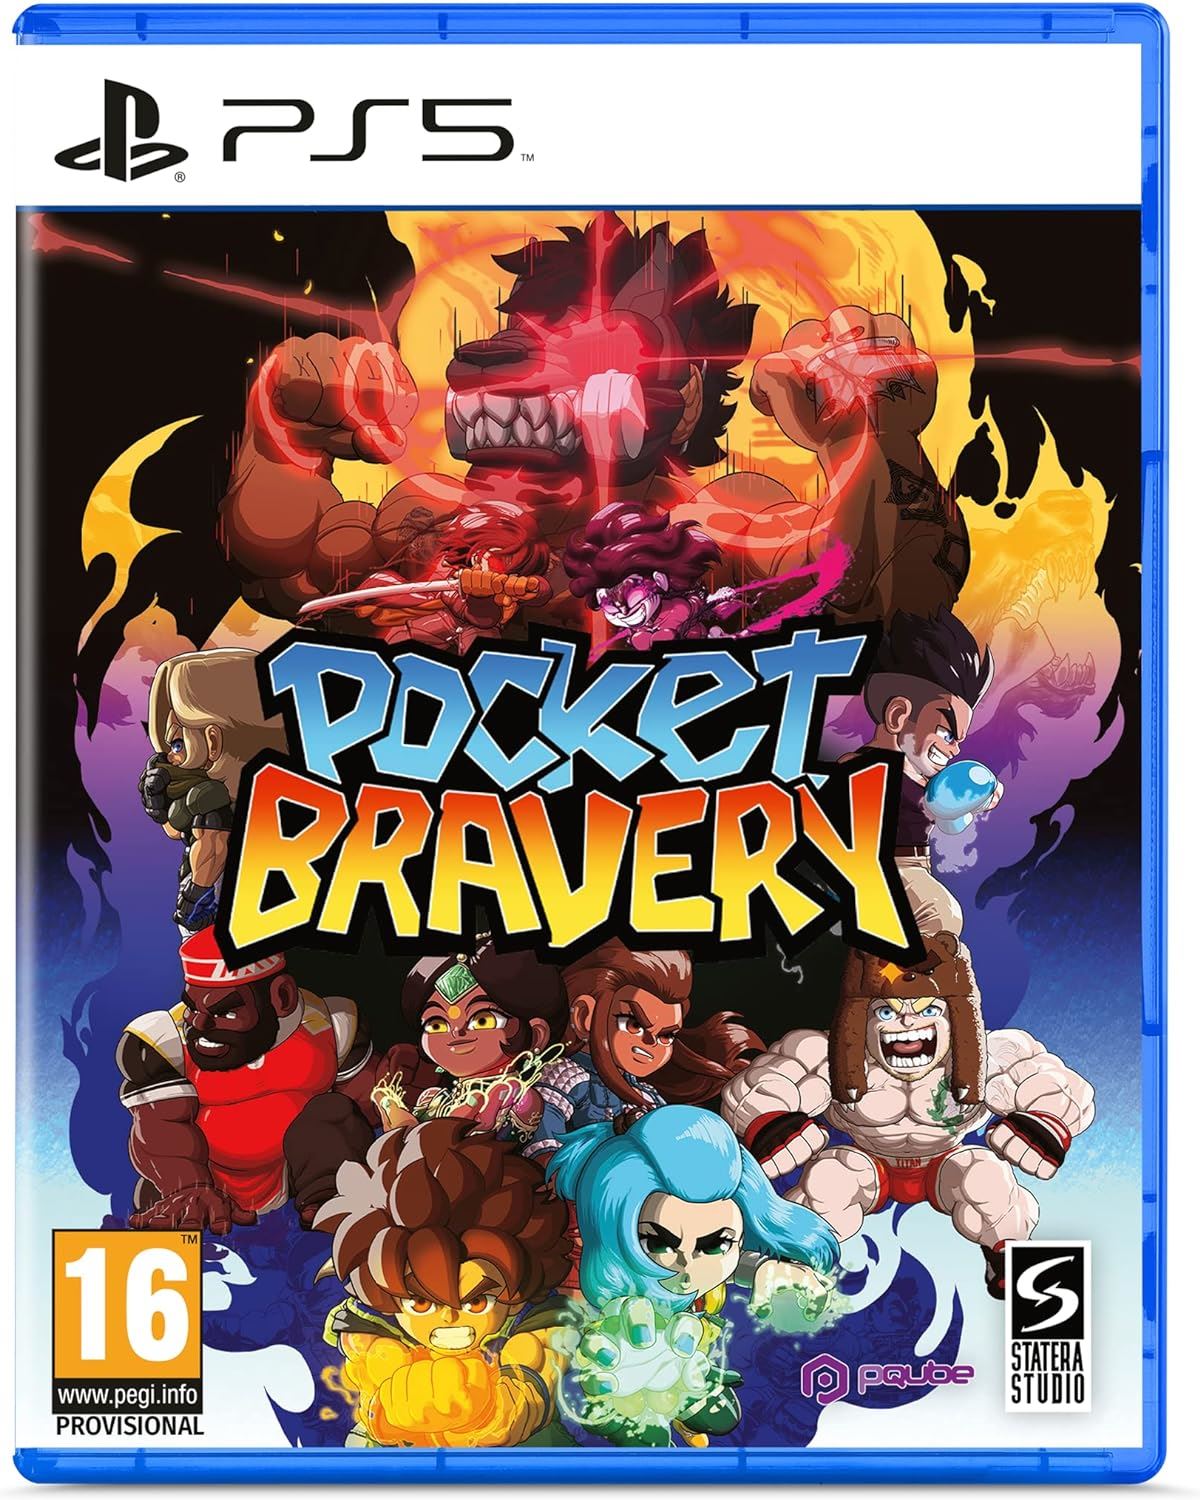 Pocket Bravery PS5 Game